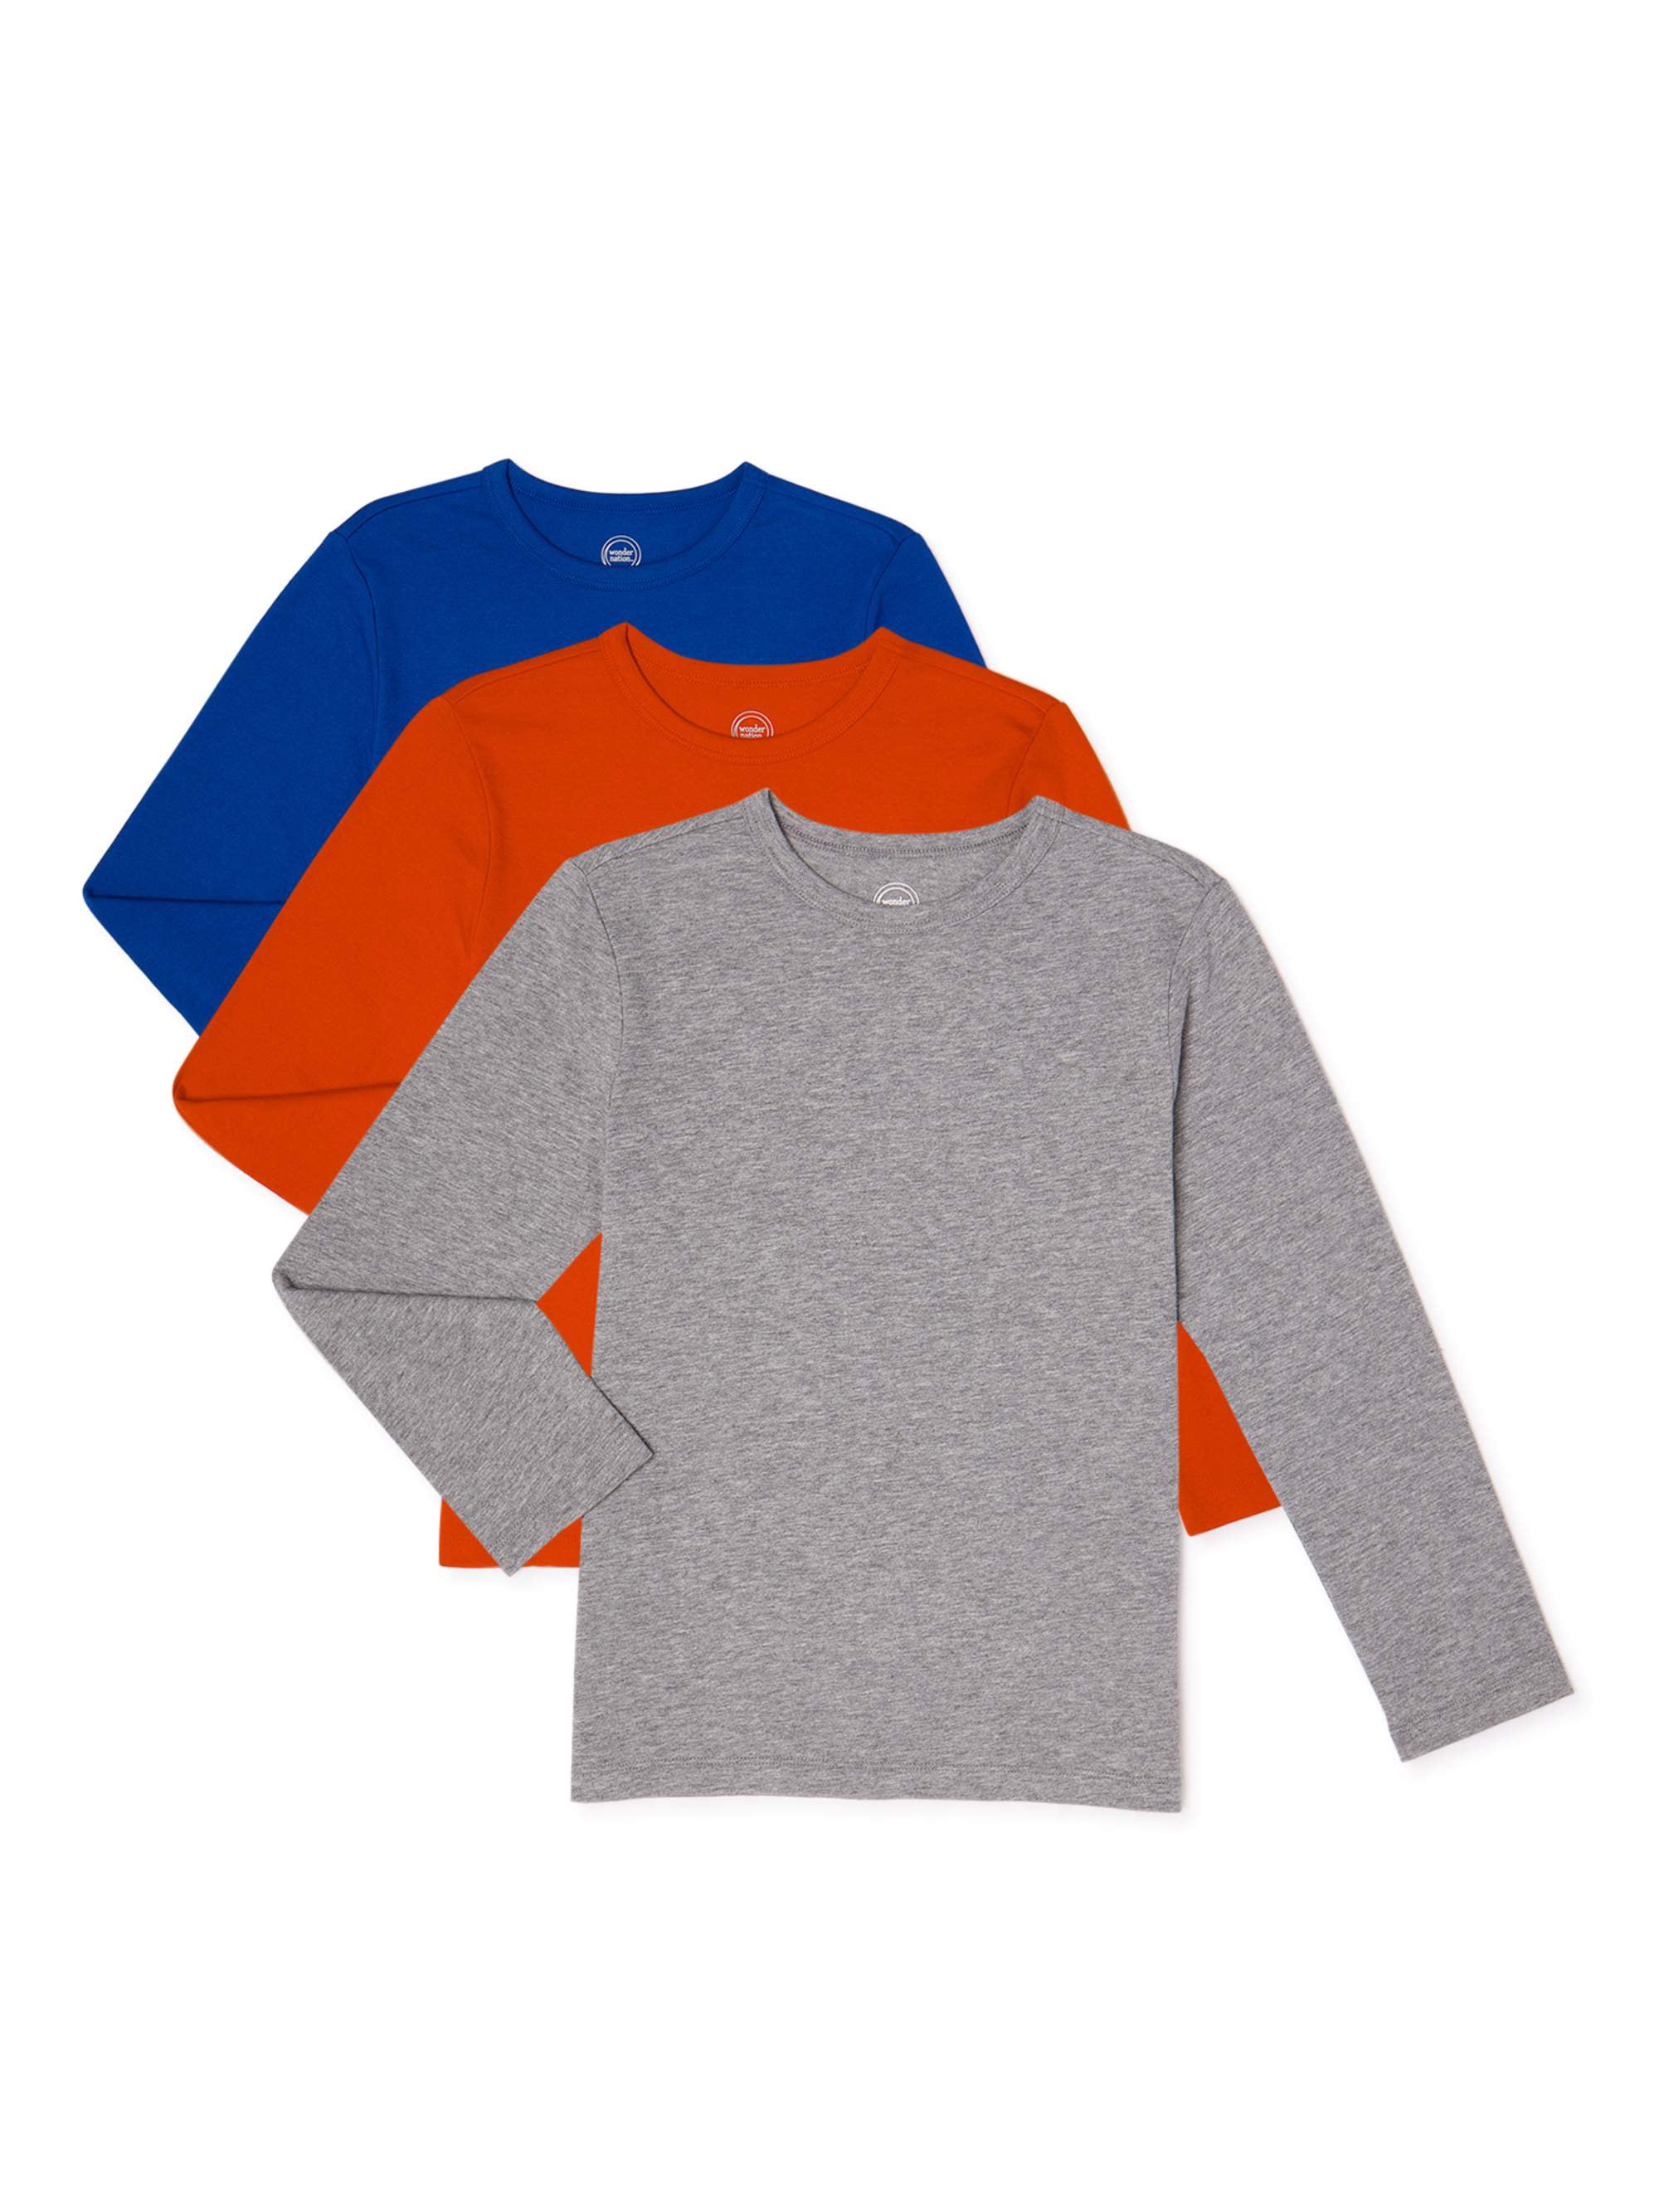 NWT Details about   Wonder Nation Boys Blue Tag Free Short Sleeve Raglan T-Shirt Size S 6-7